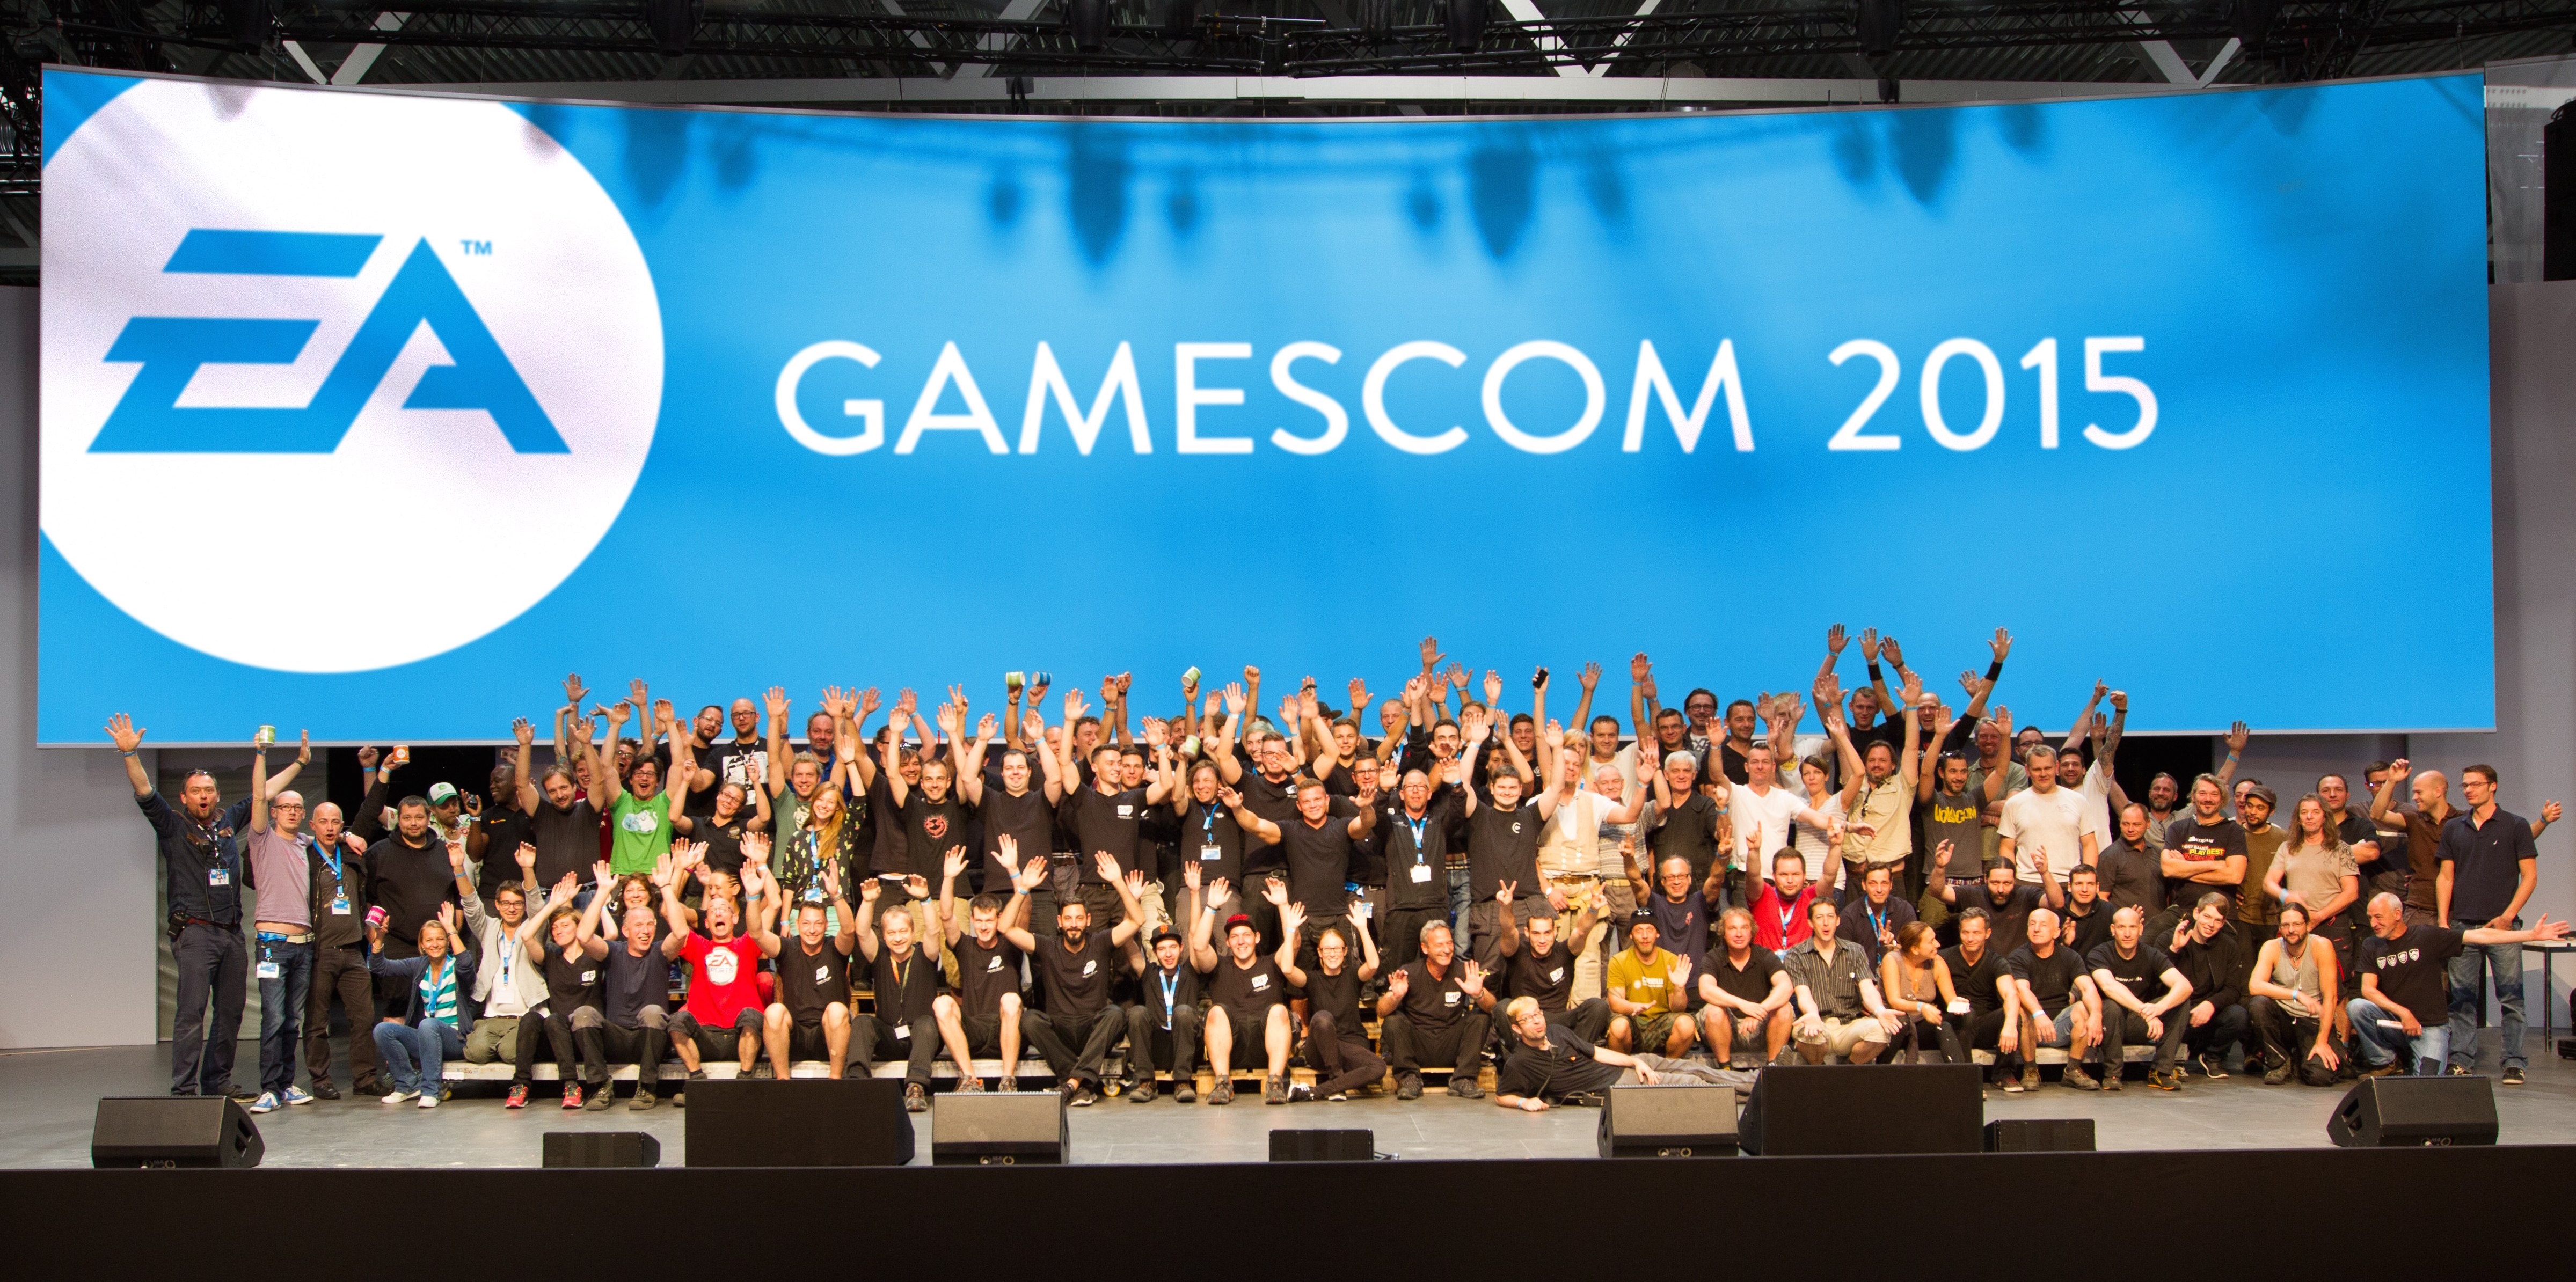 Electronic Arts gamescom 2015